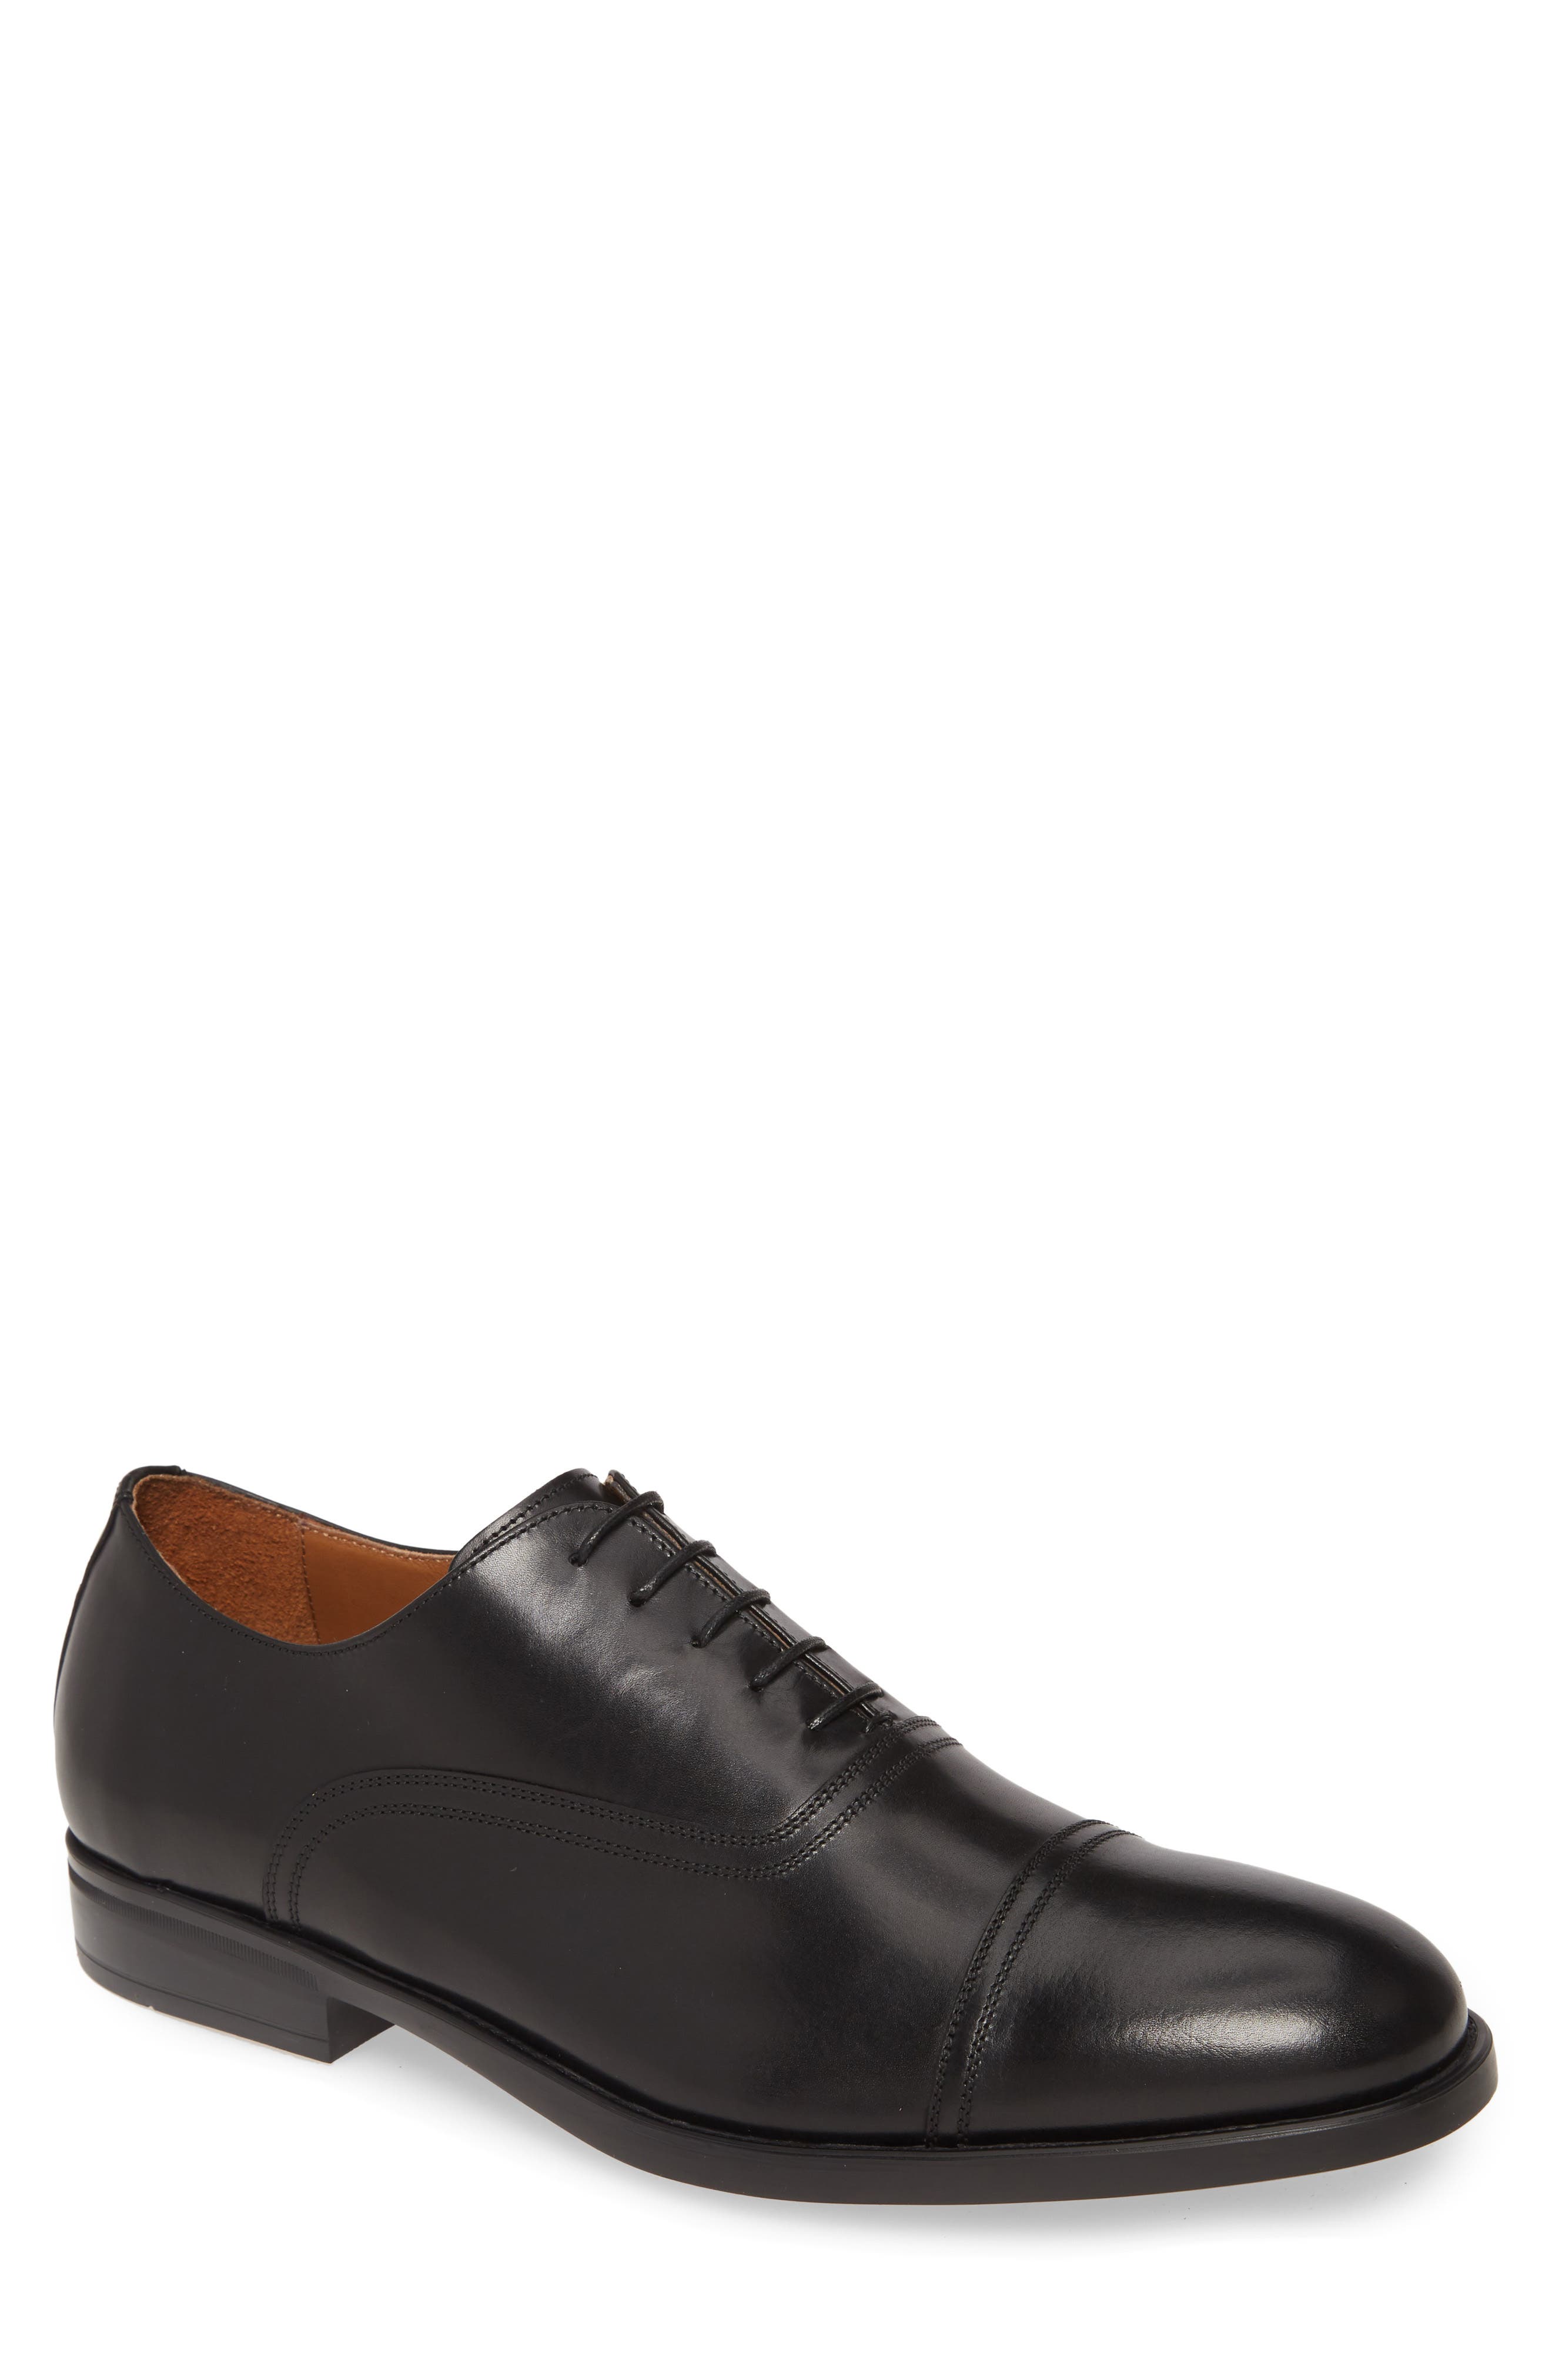 bruno magli formal shoes